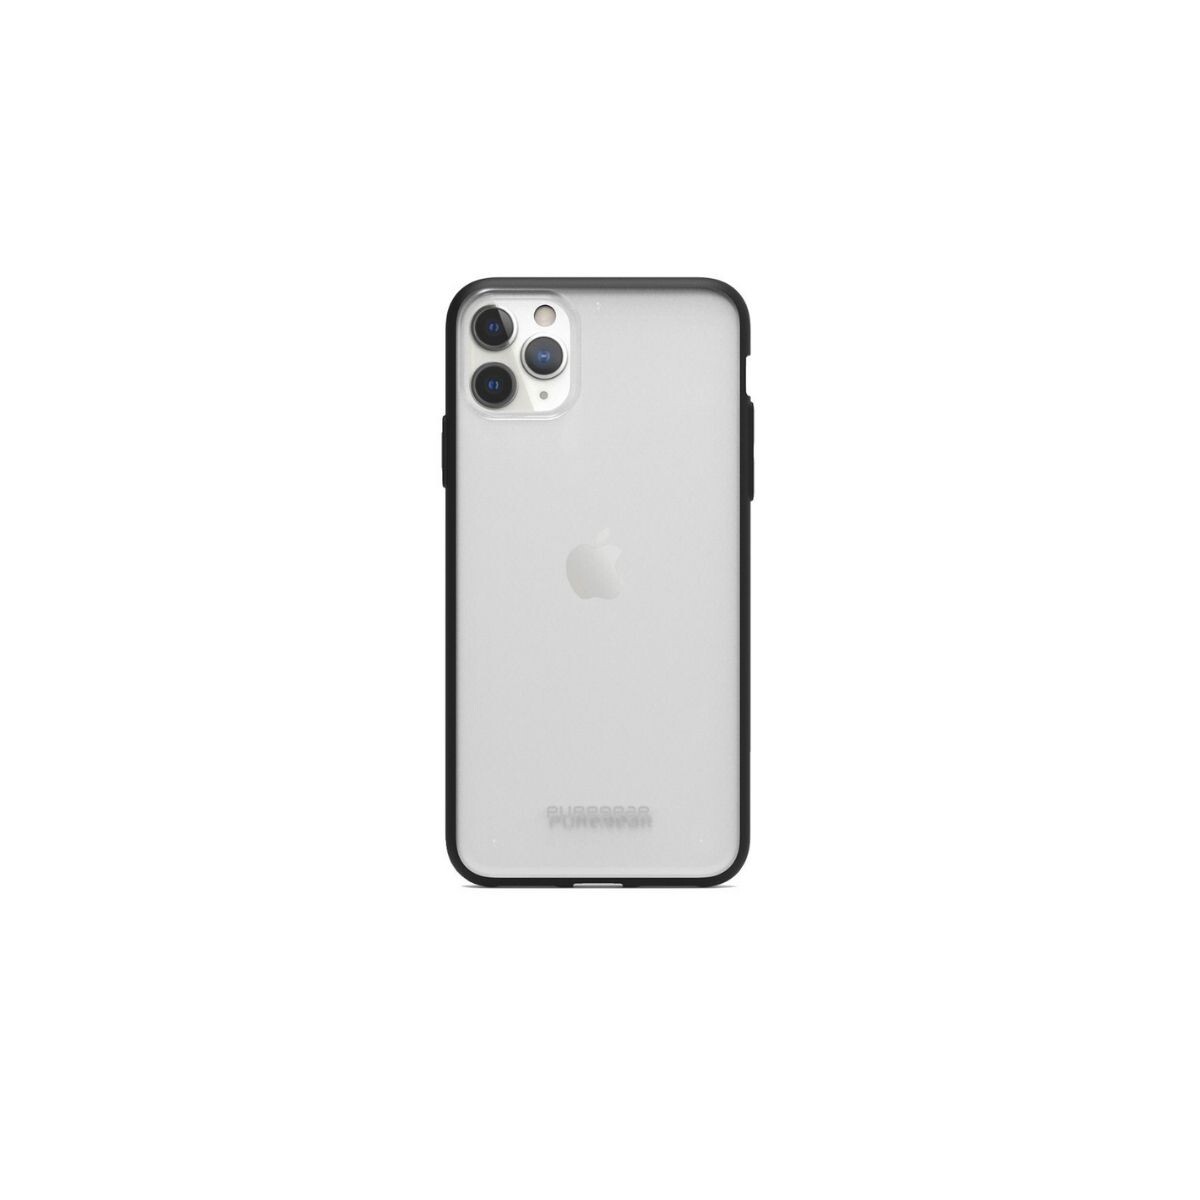 Protector Slim PureGear para Iphone 11 Pro Max 